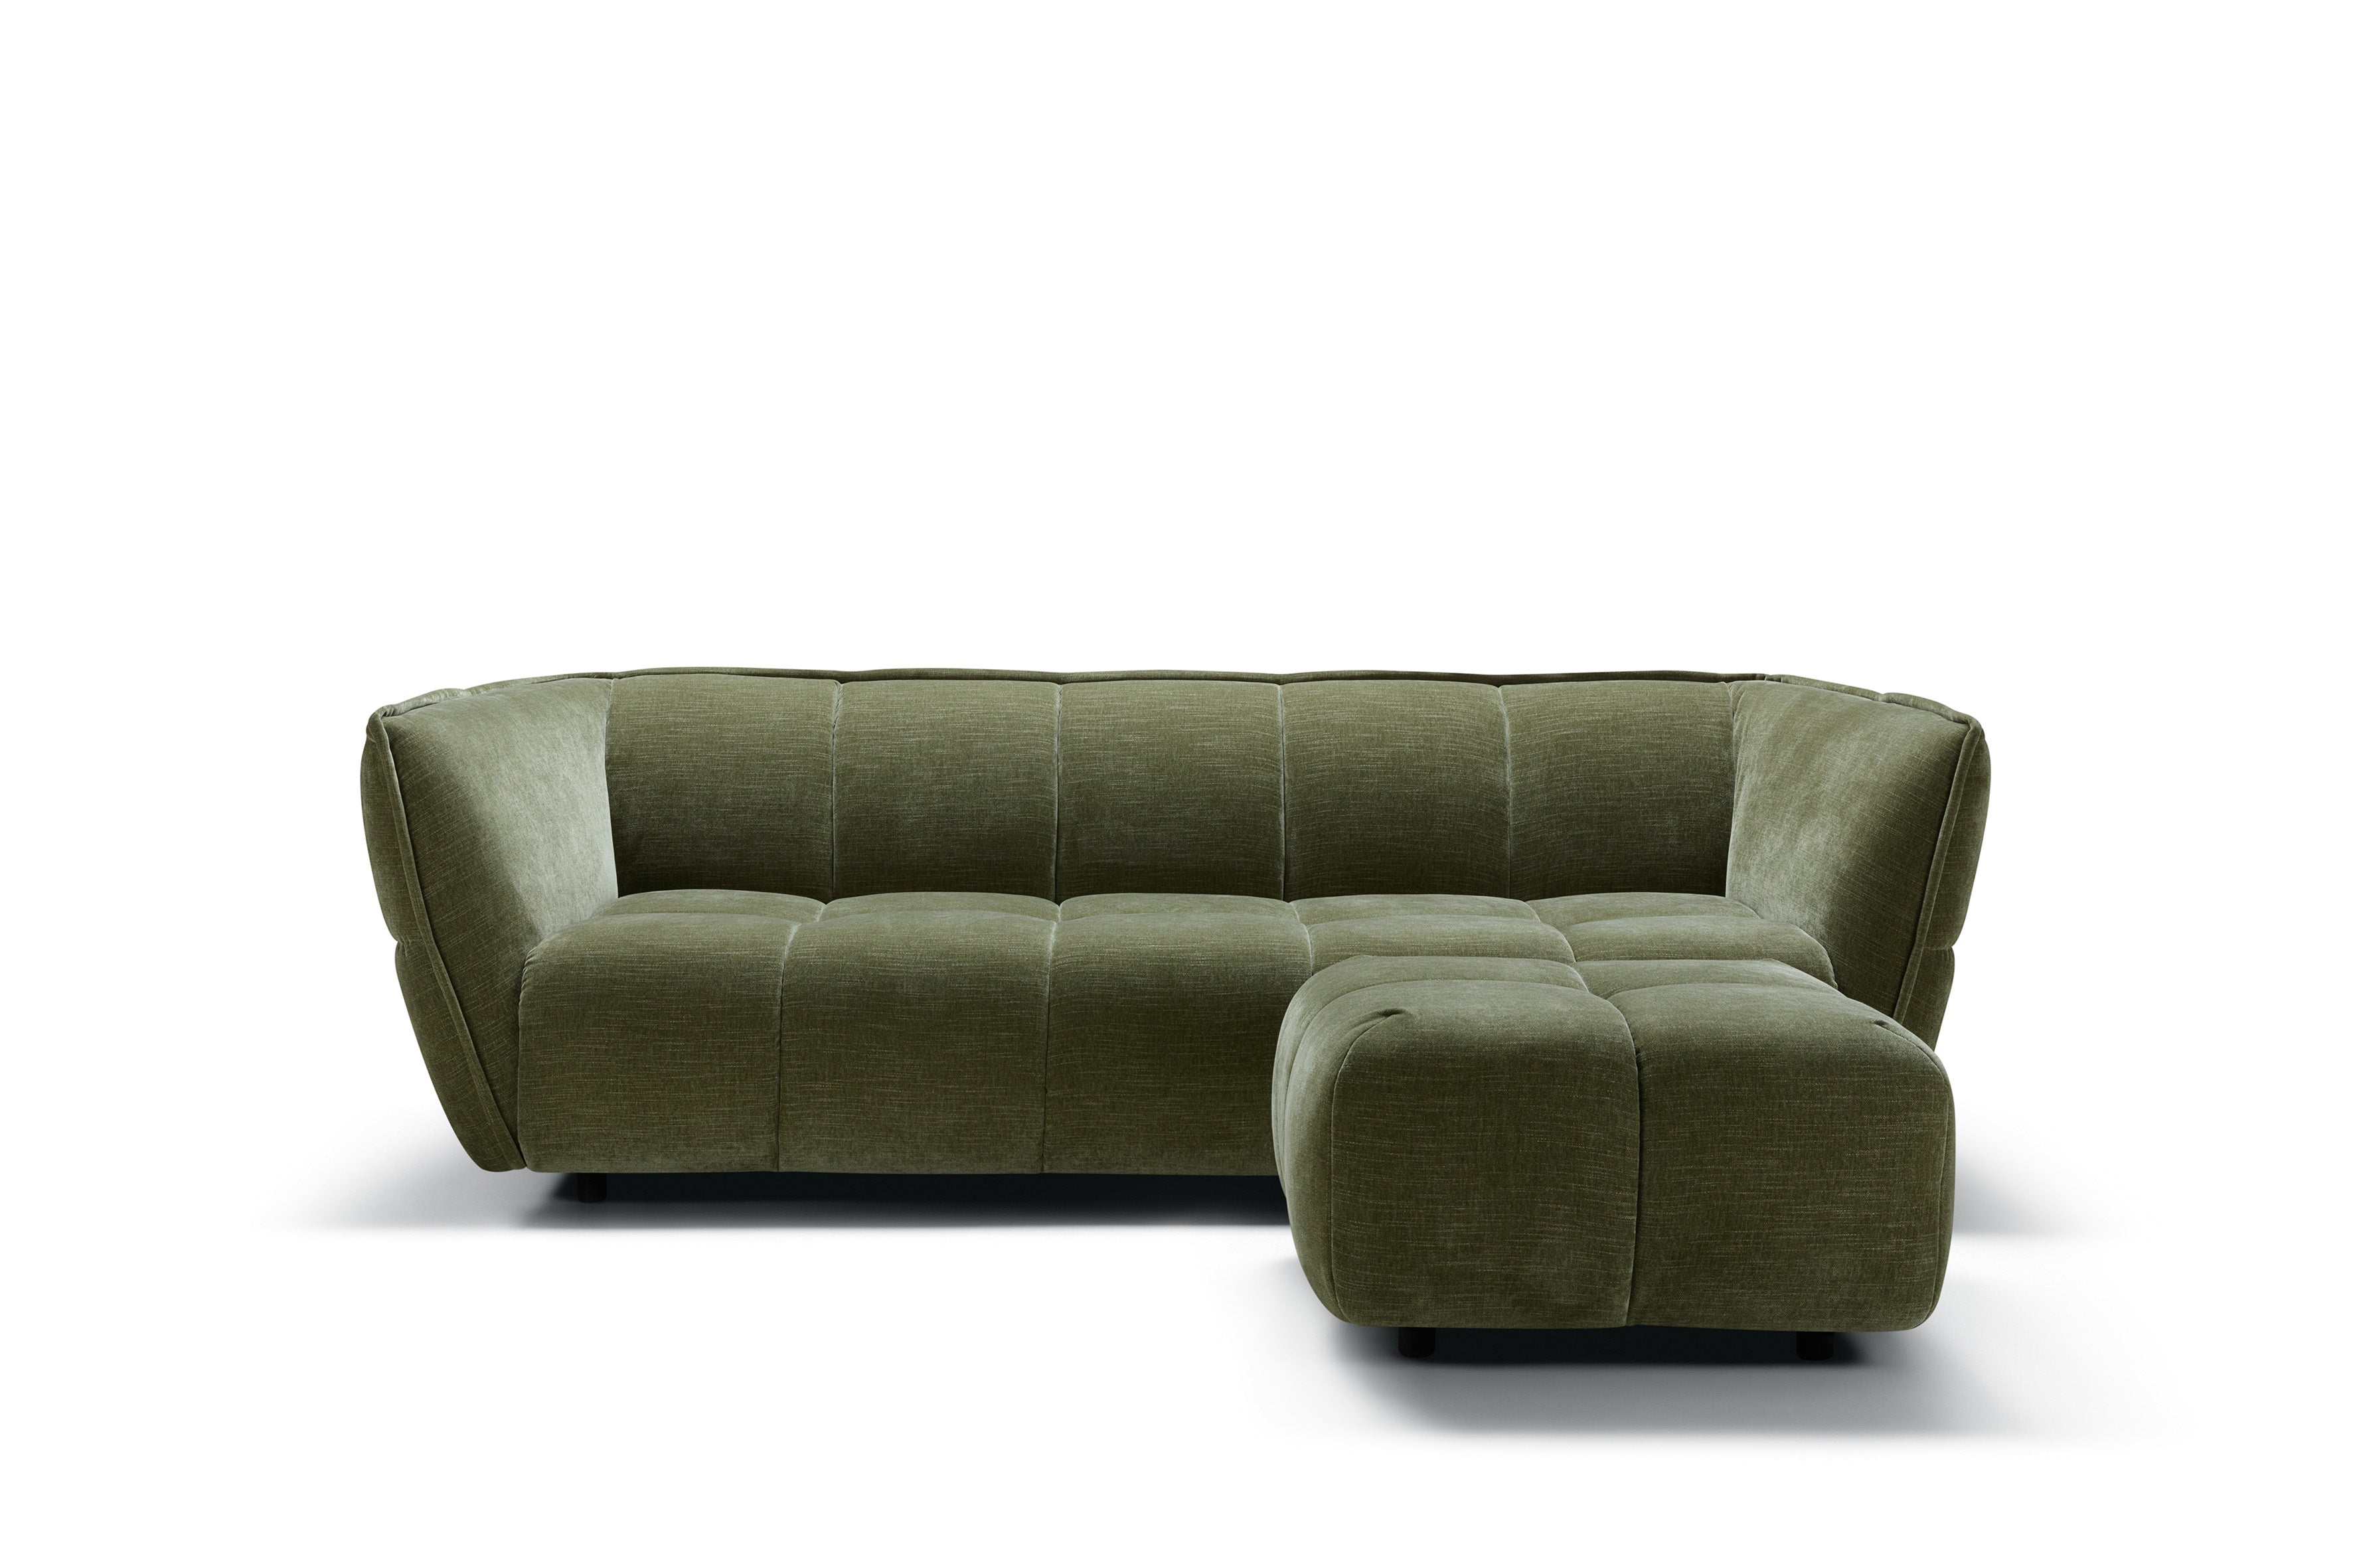 Mastrella Clove 3 Seater Sofa